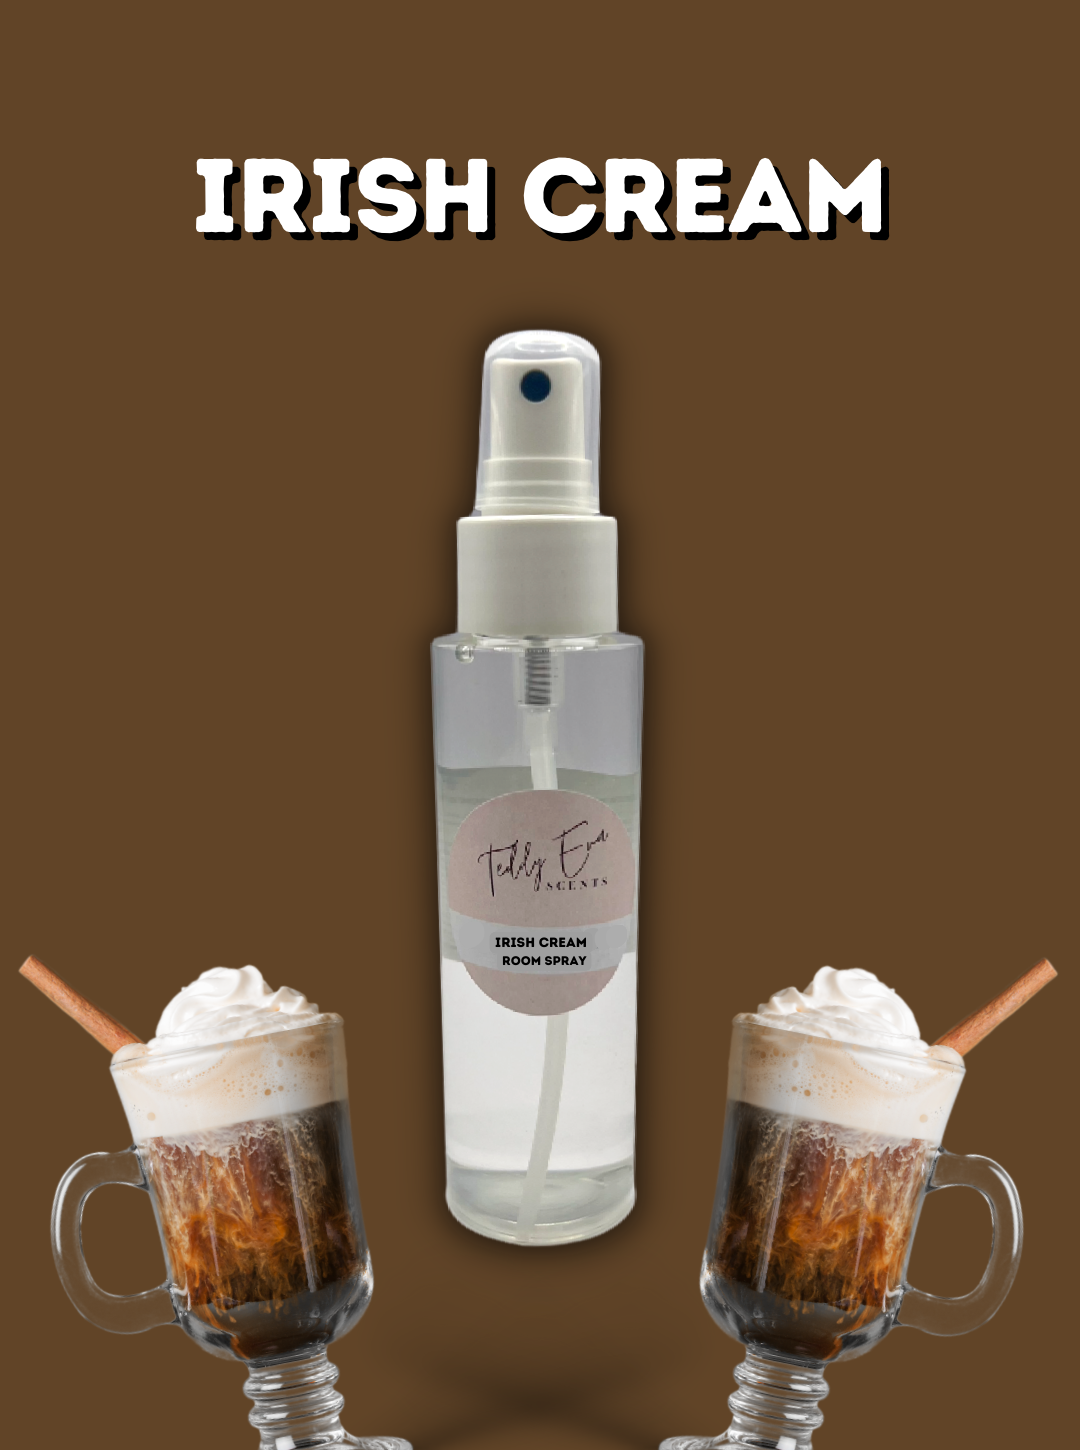 Irish Cream 100ml Room Spray